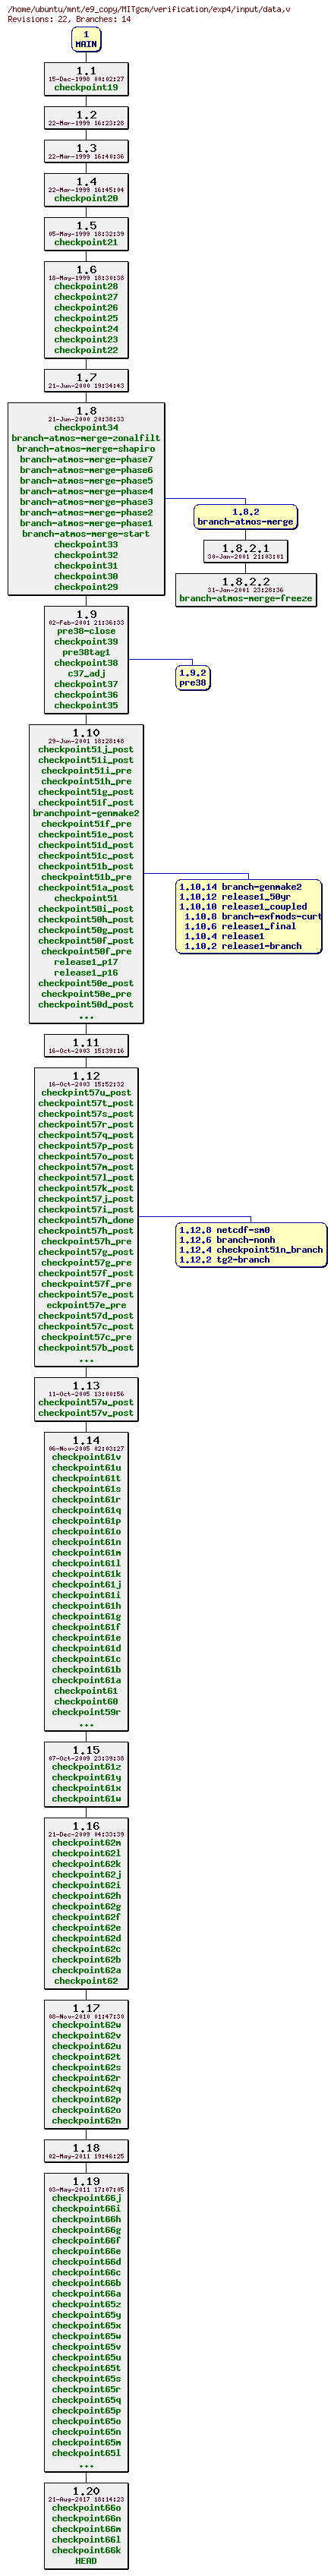 Revisions of MITgcm/verification/exp4/input/data